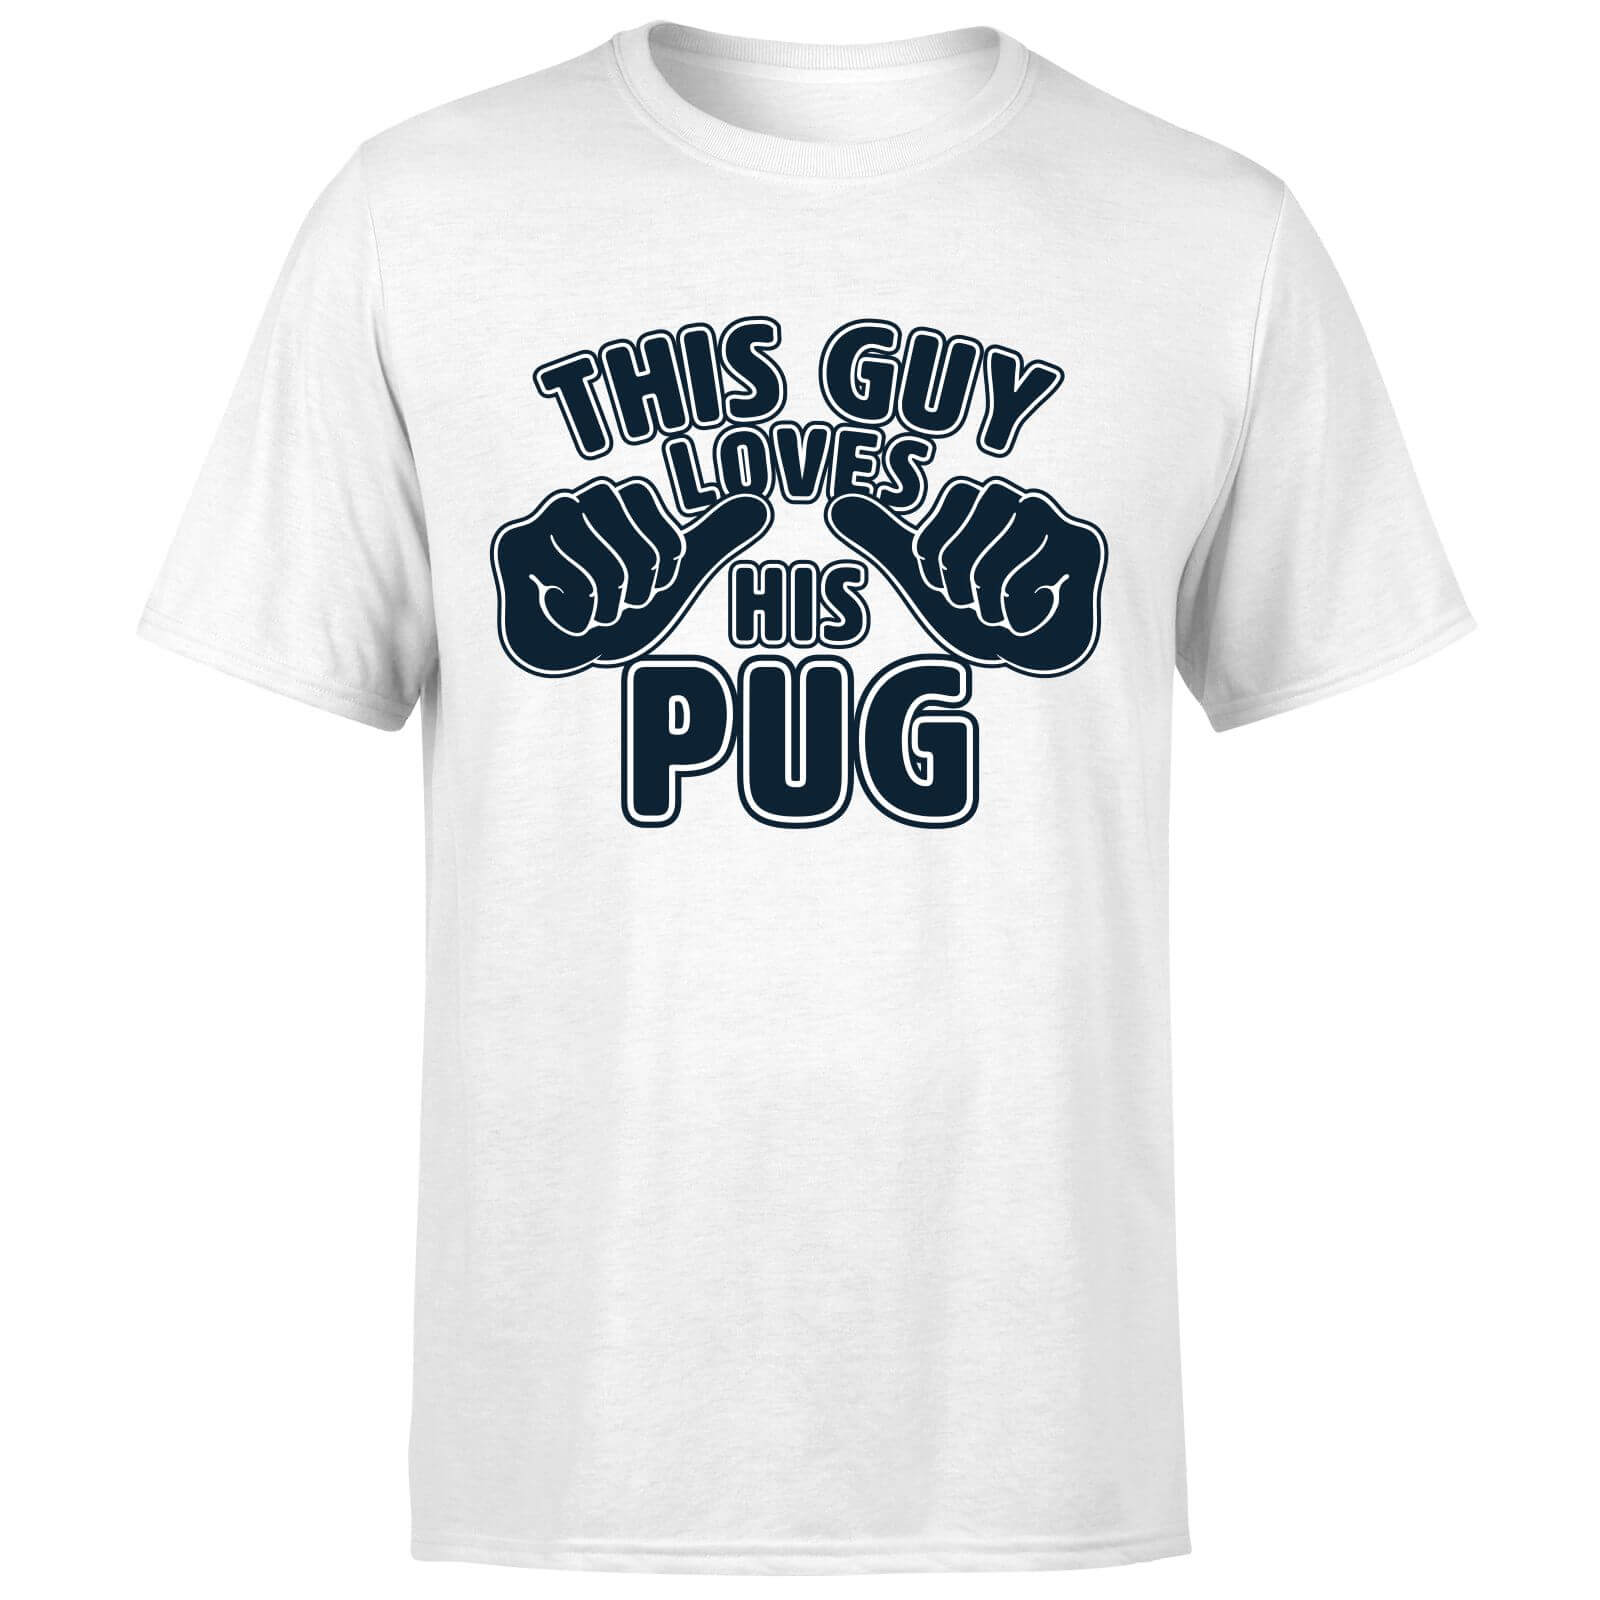 This Guy Loves His Pug T-Shirt - White - 5Xl - White